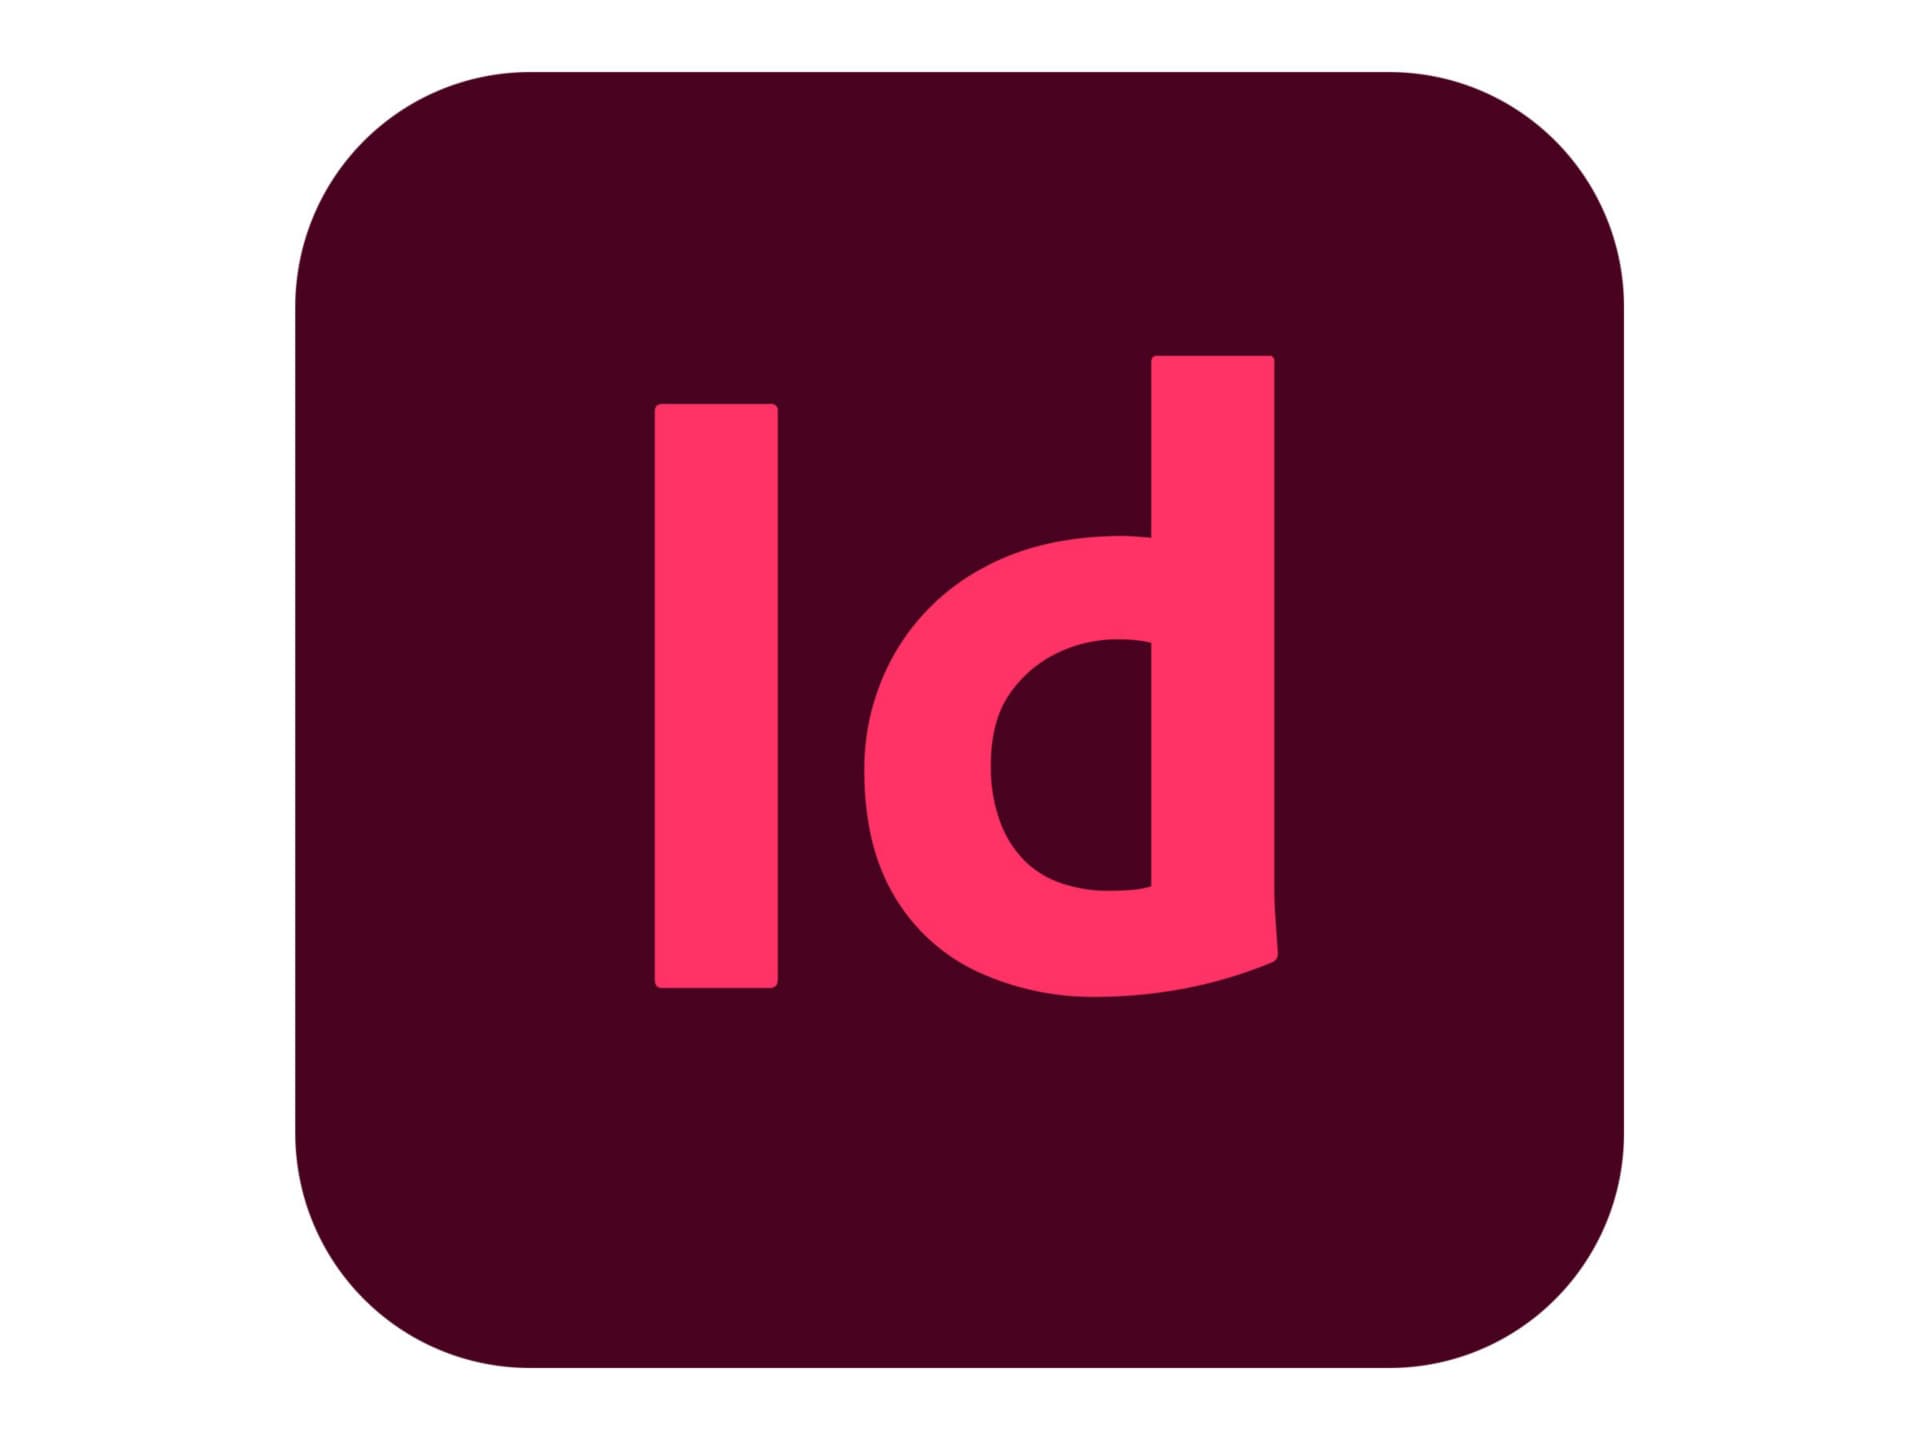 Adobe InDesign CC for Enterprise - Subscription New (10 months) - 1 named user